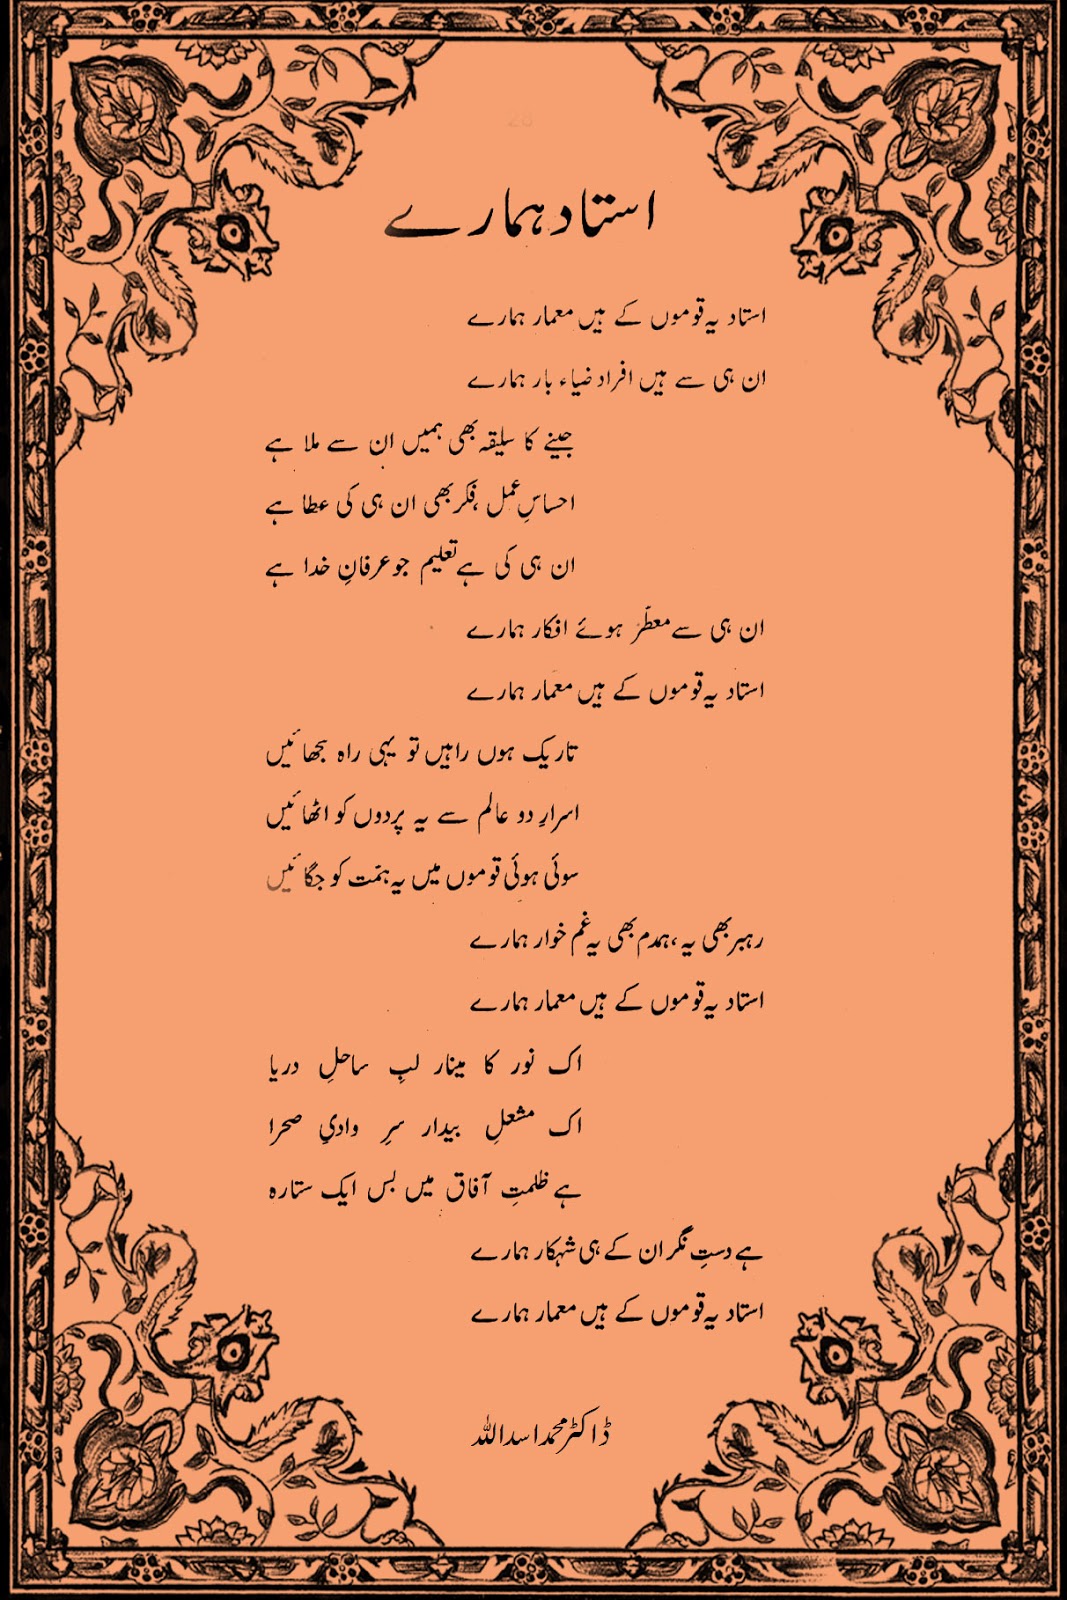 Urdu literature